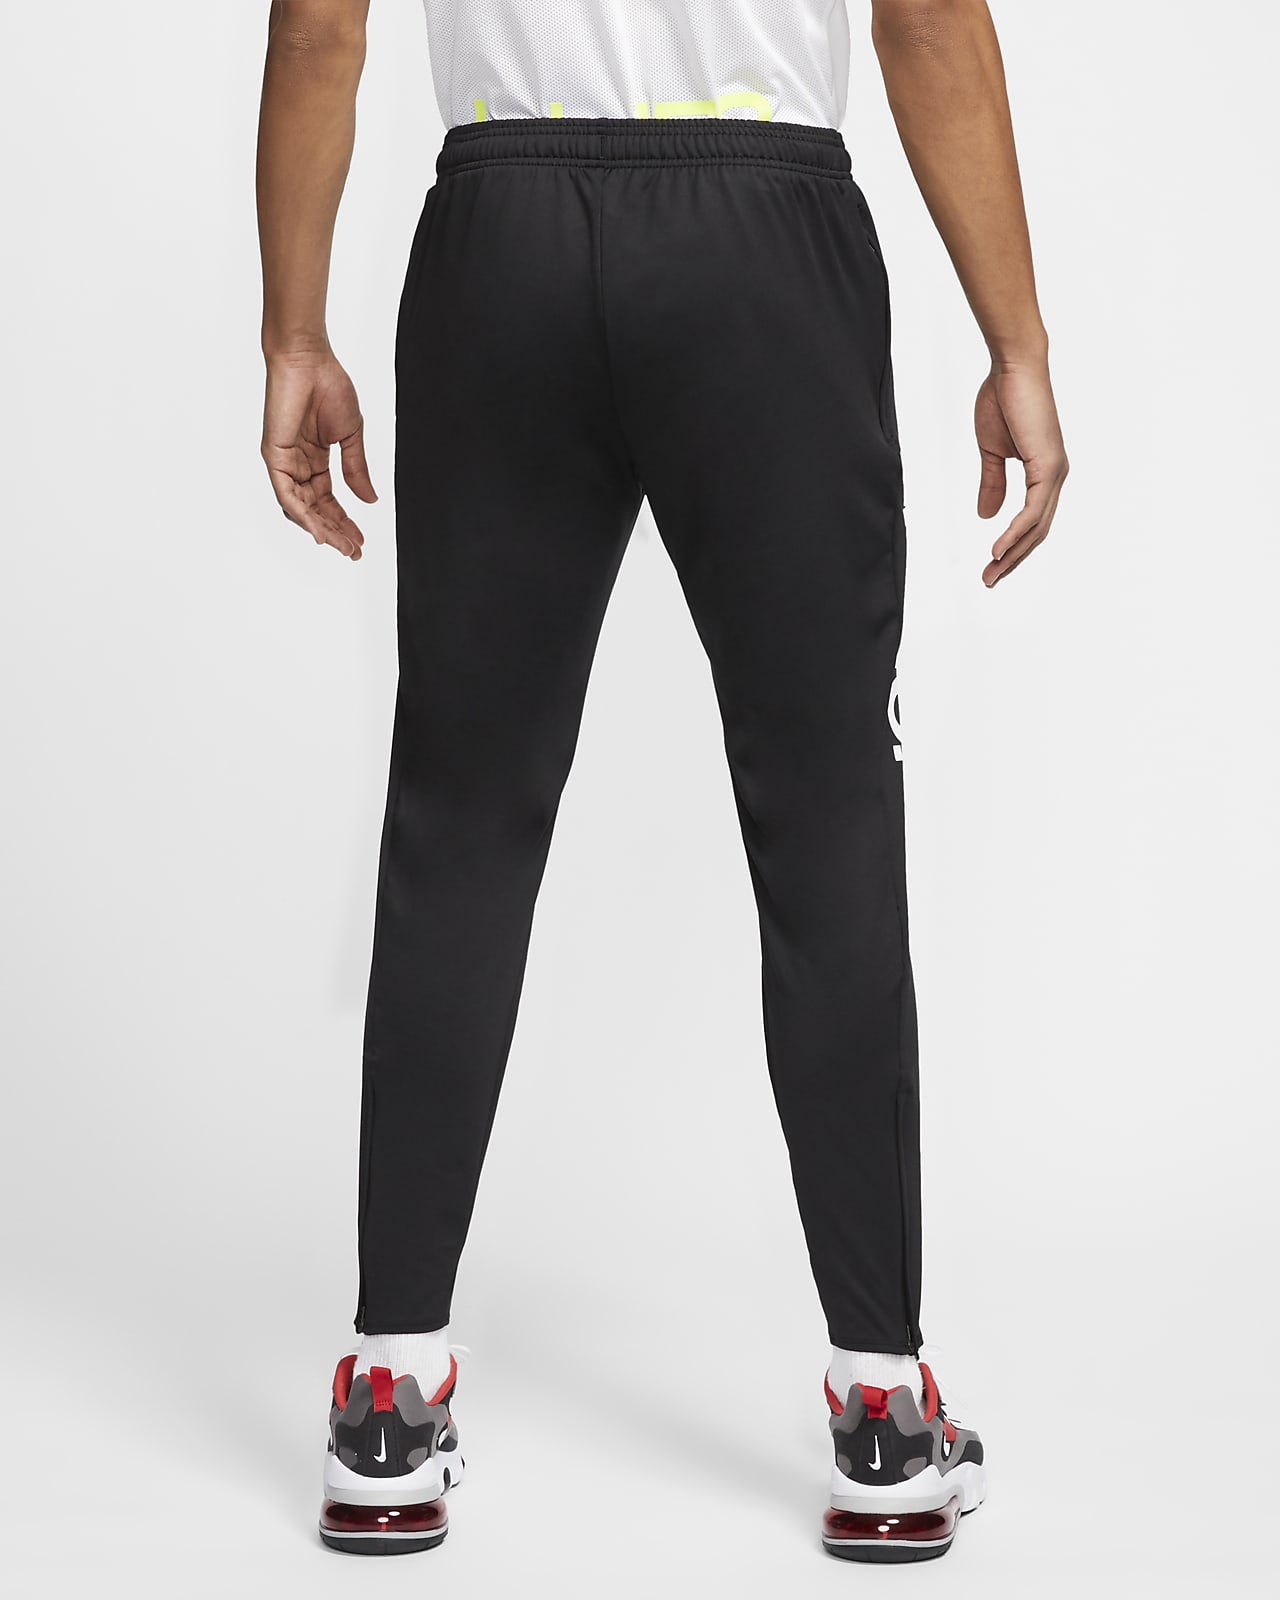 Nike F.C. Essential Men's Soccer Pants.